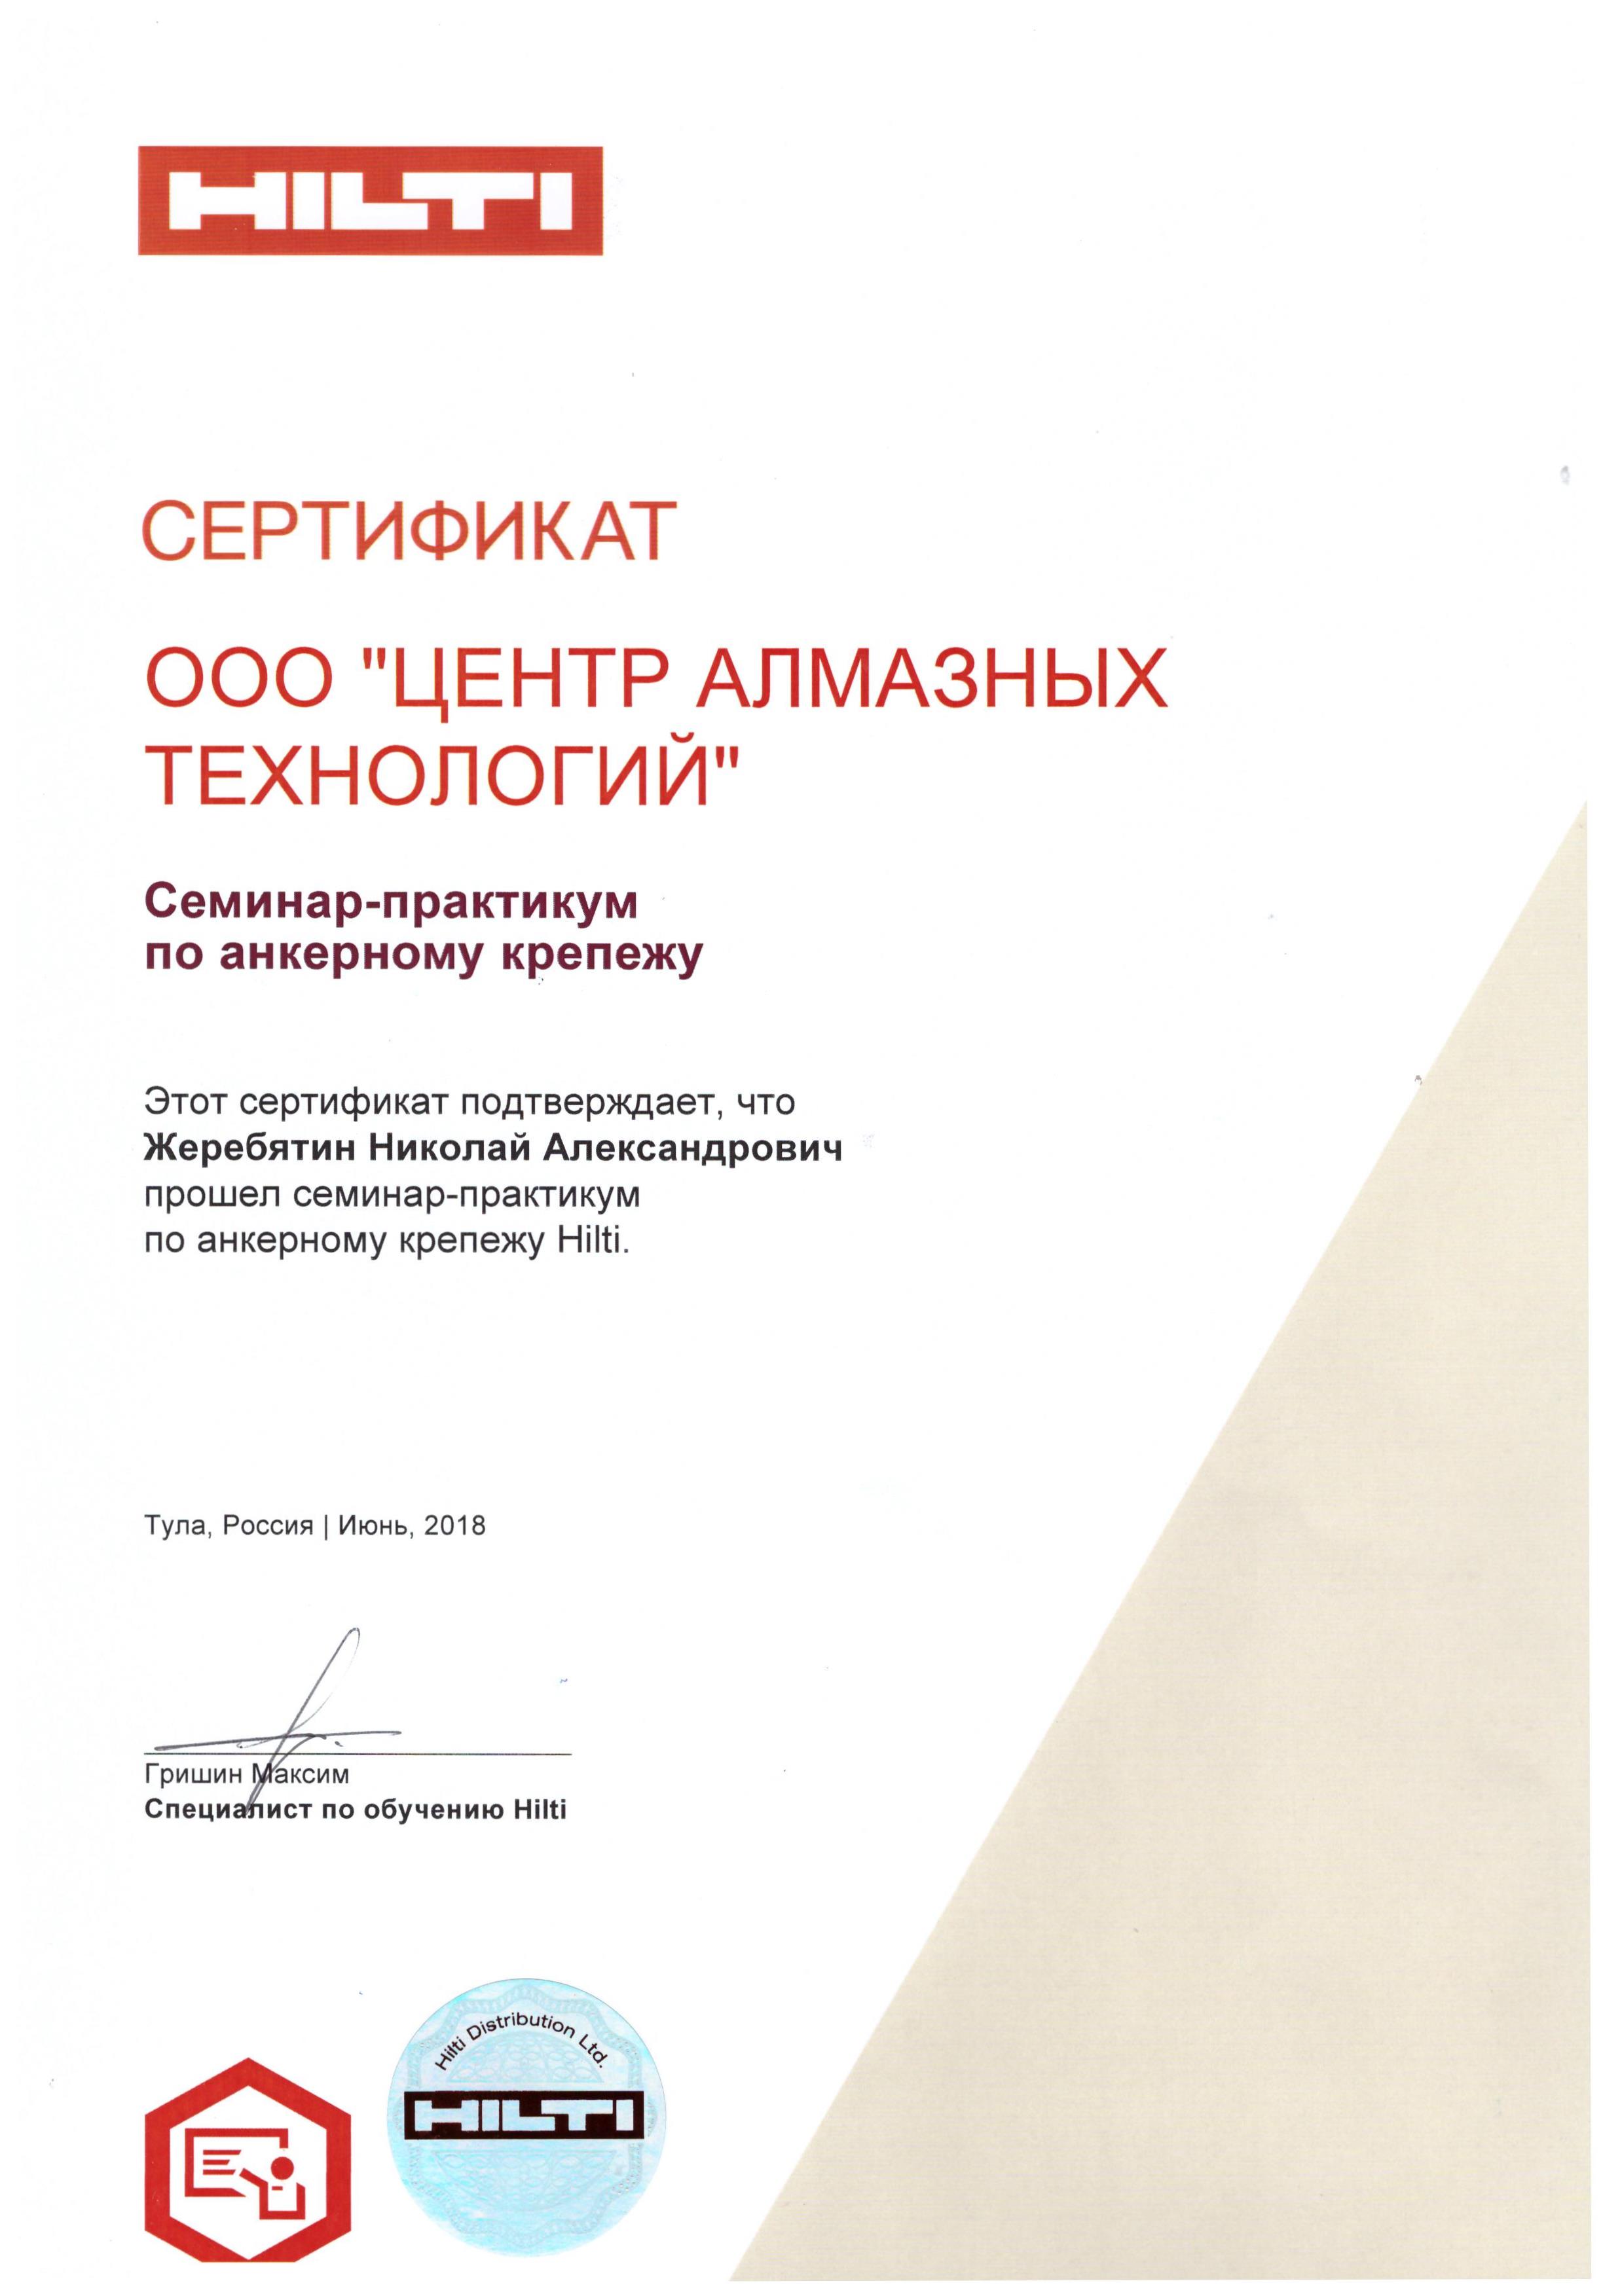 Сертификат по анкерному крепежу сотрудника ЦАТ Николай Жеребятин